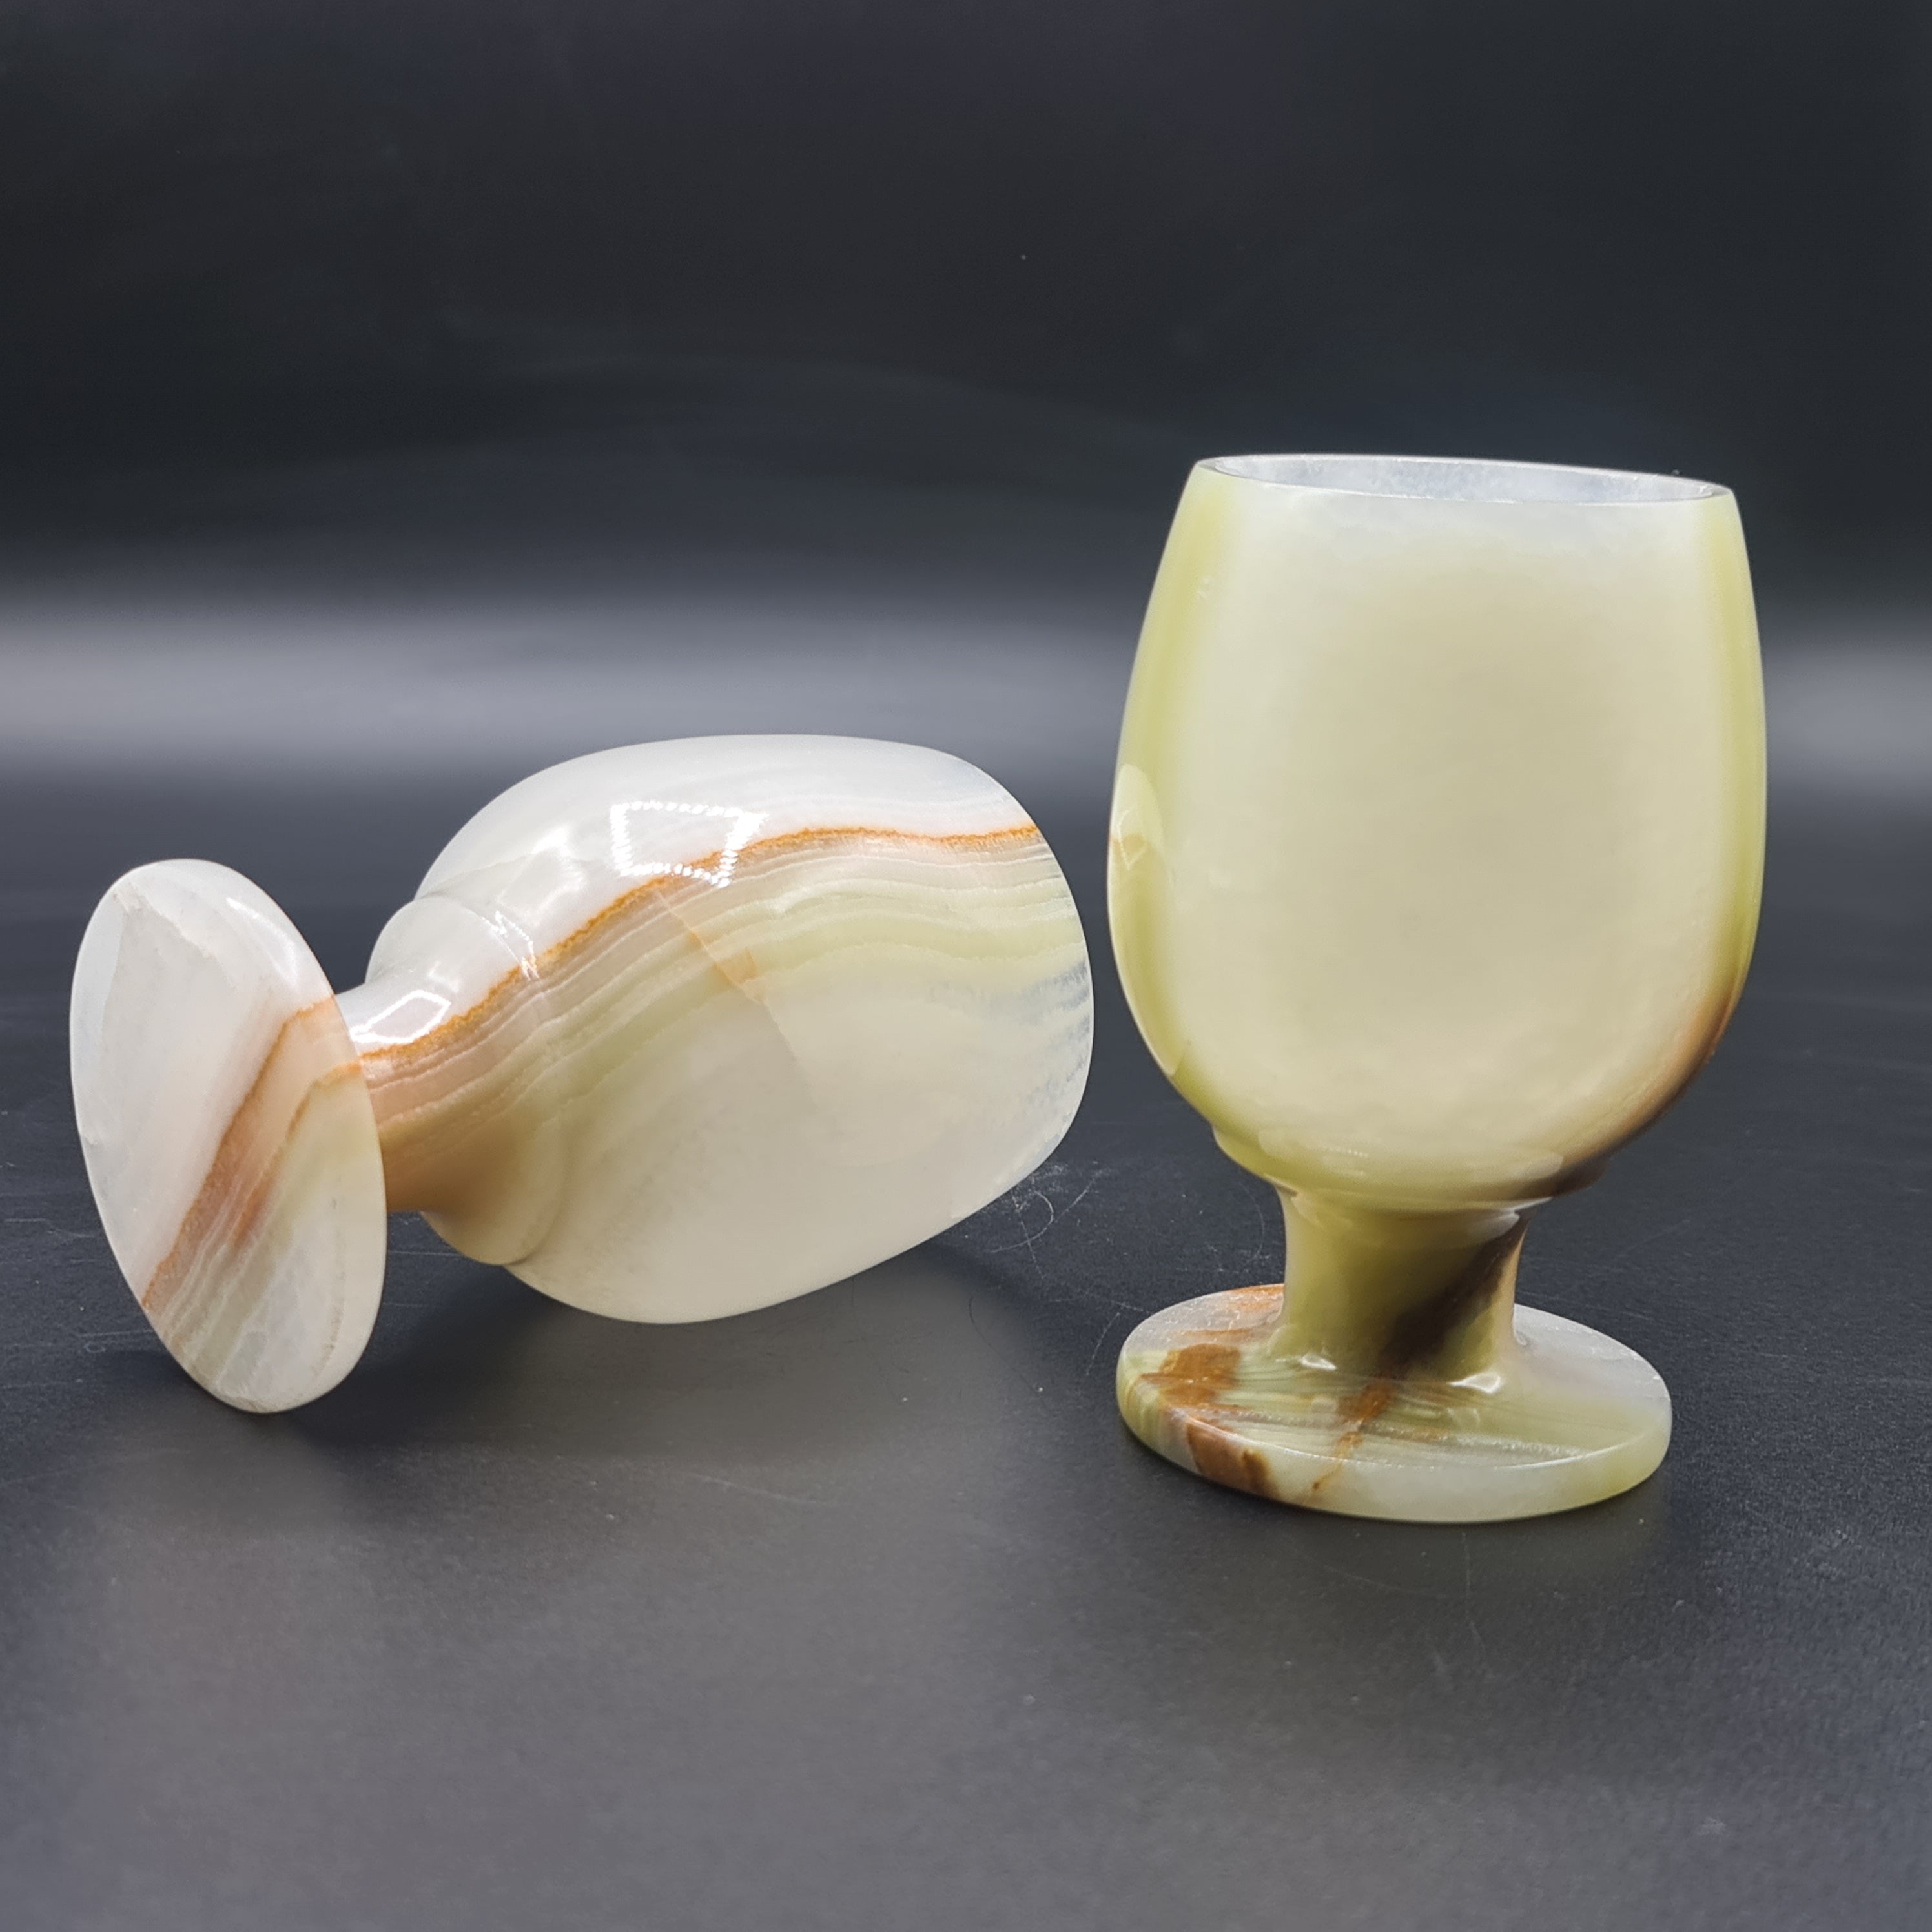 Onyx Goblets (Set of 2), Onyx Wine Glasses, Crystal carved glasses